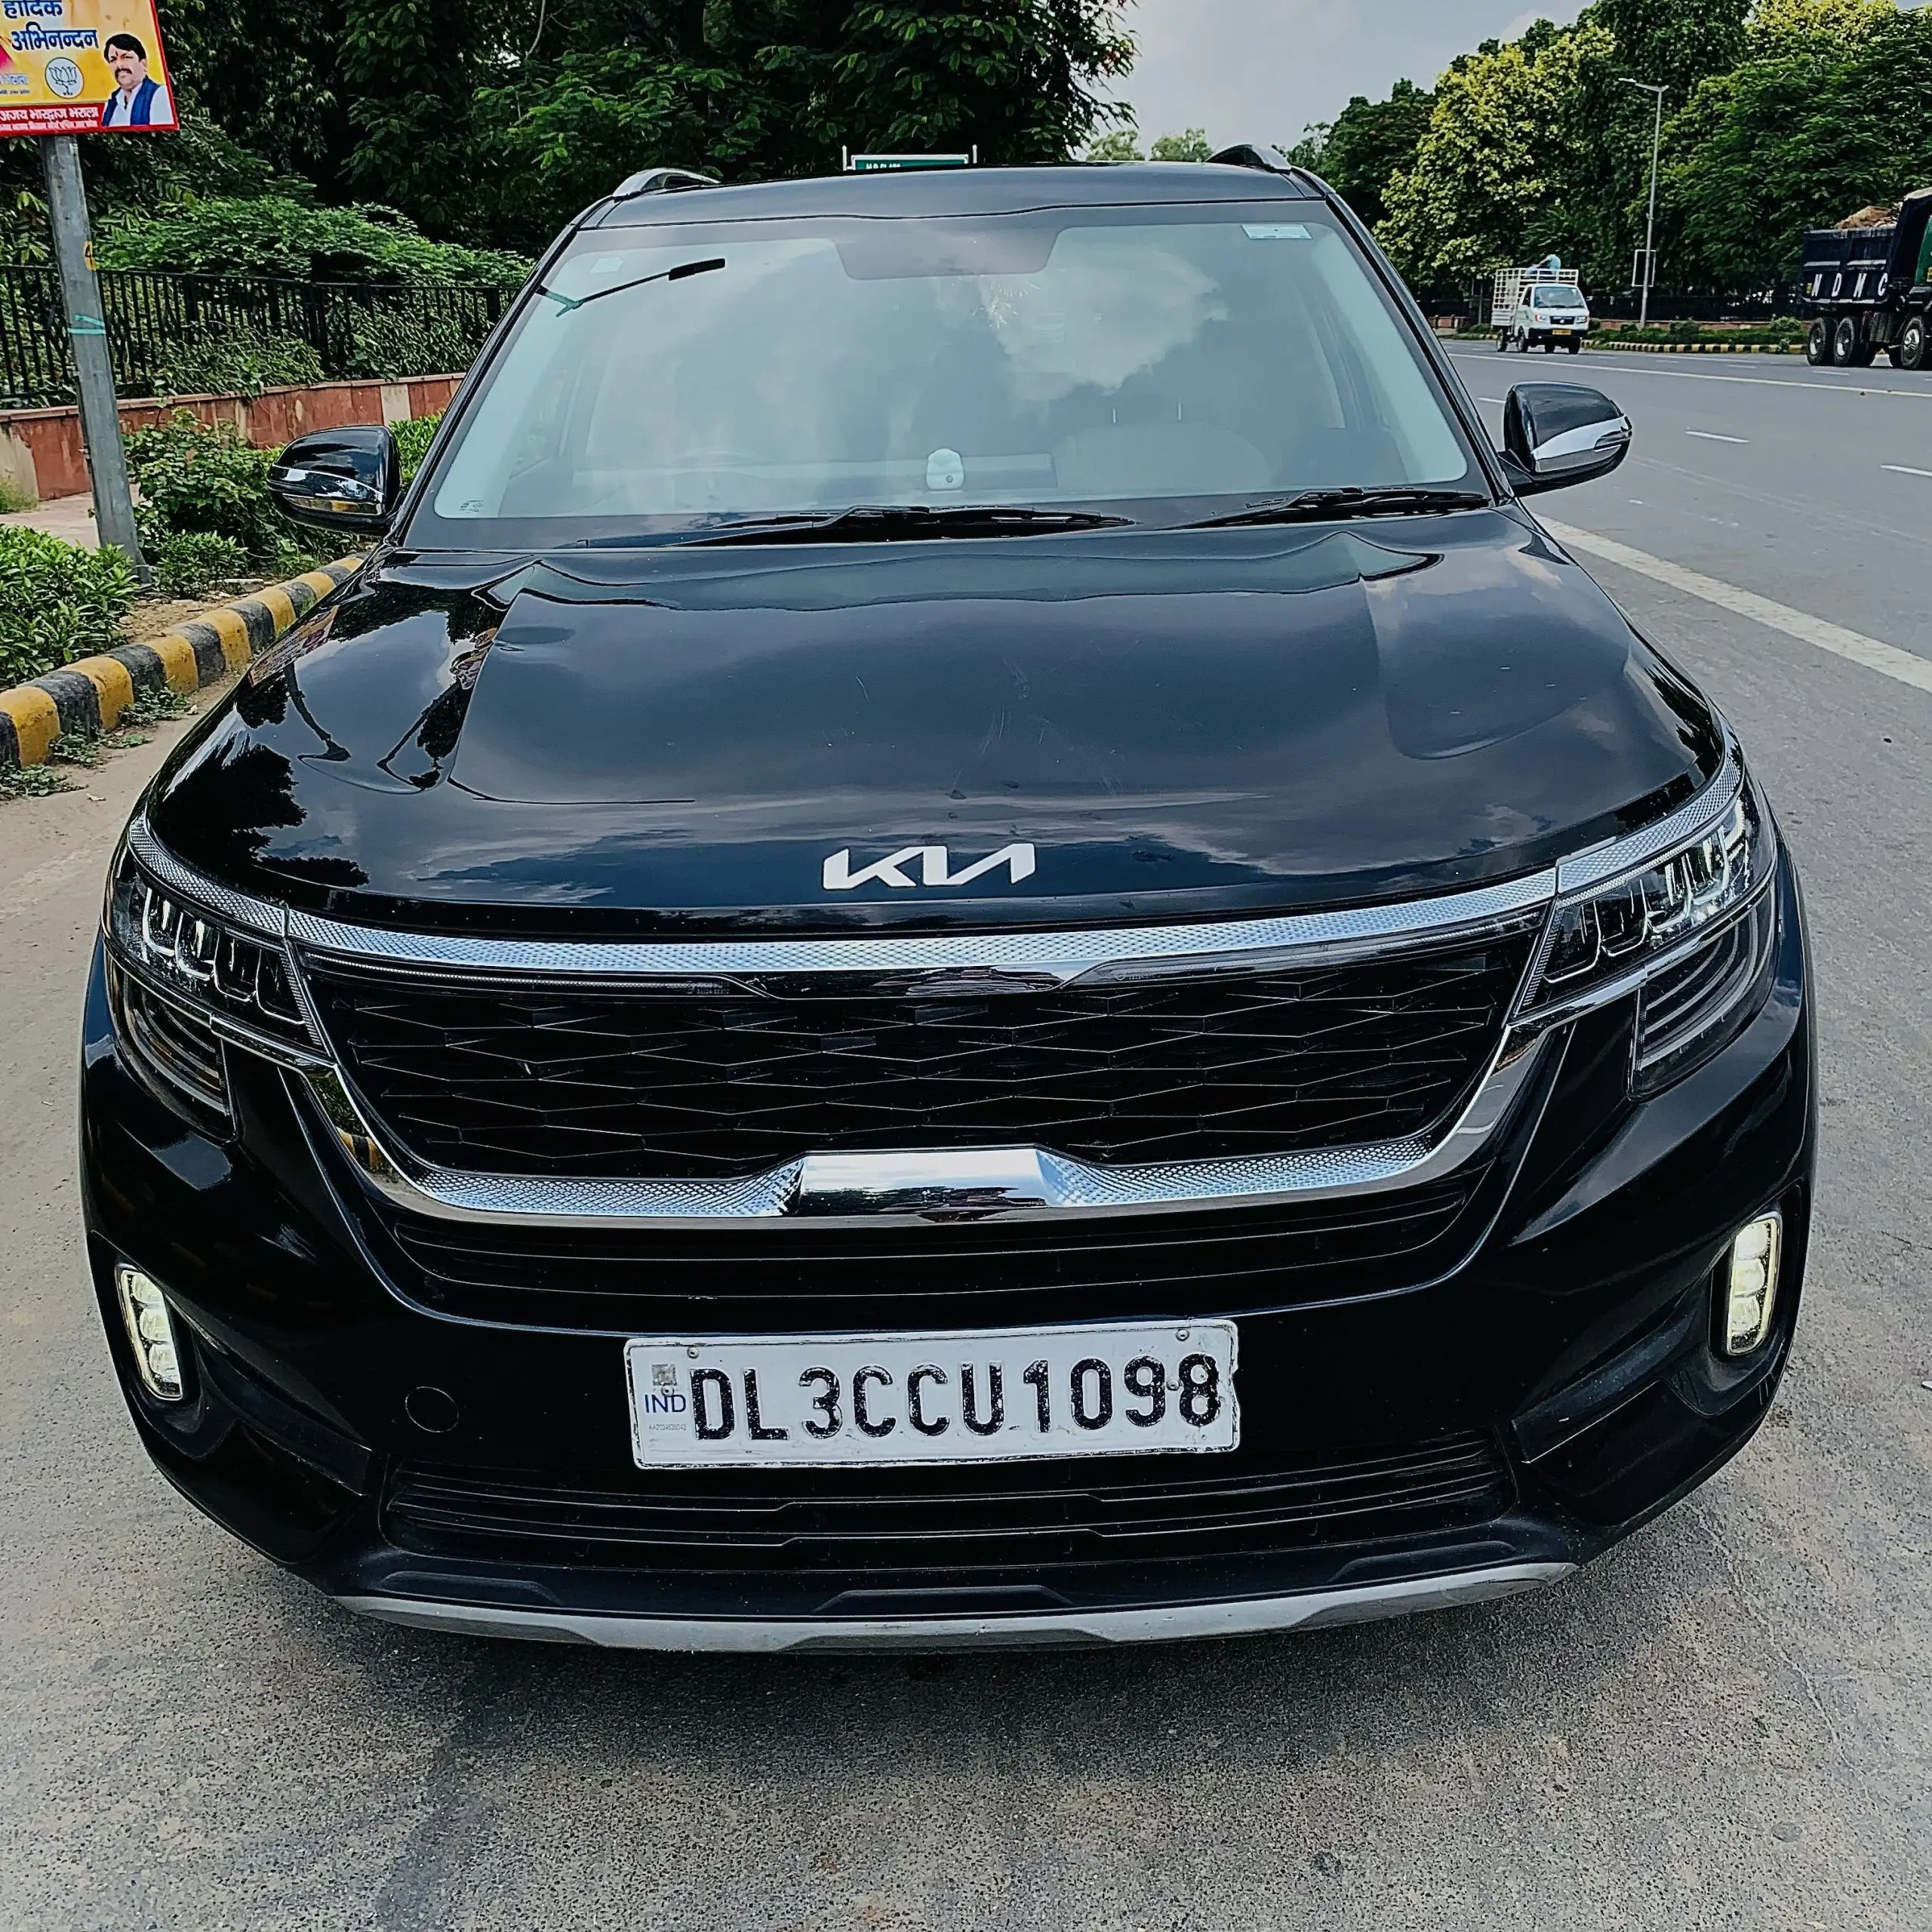 Self drive car in delhi - seltos